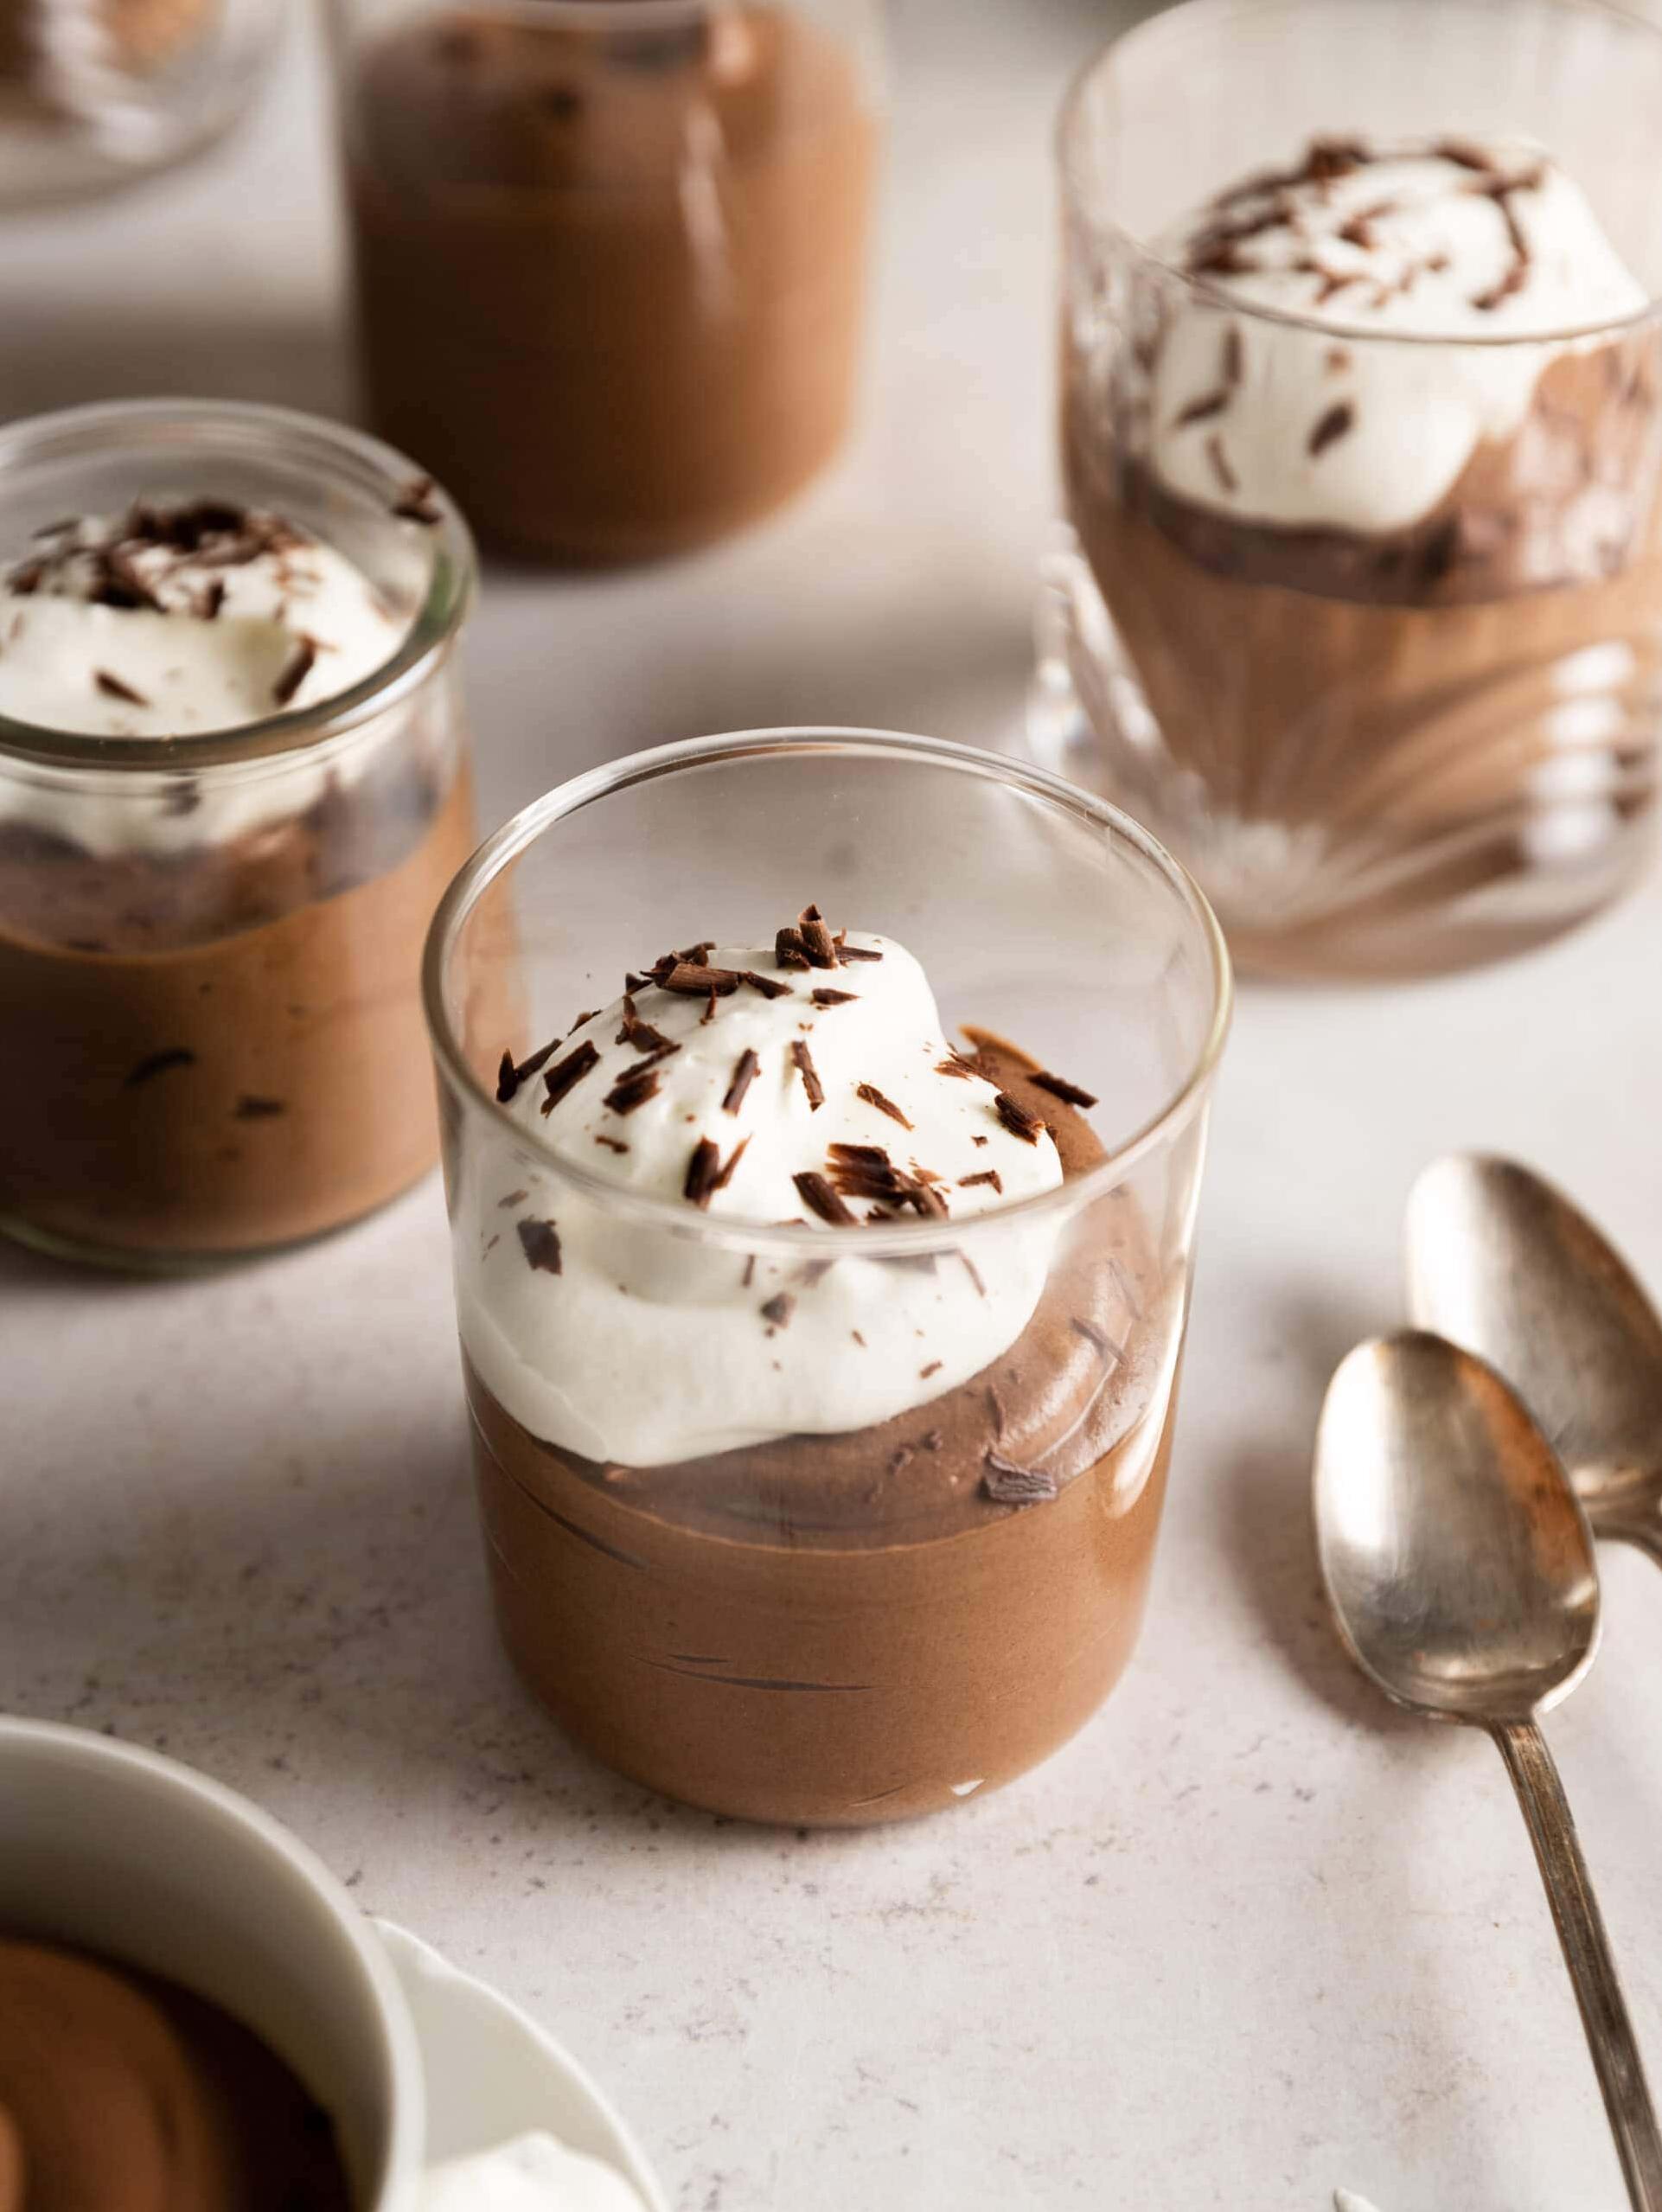  Perfect for coffee lovers who also appreciate dessert.